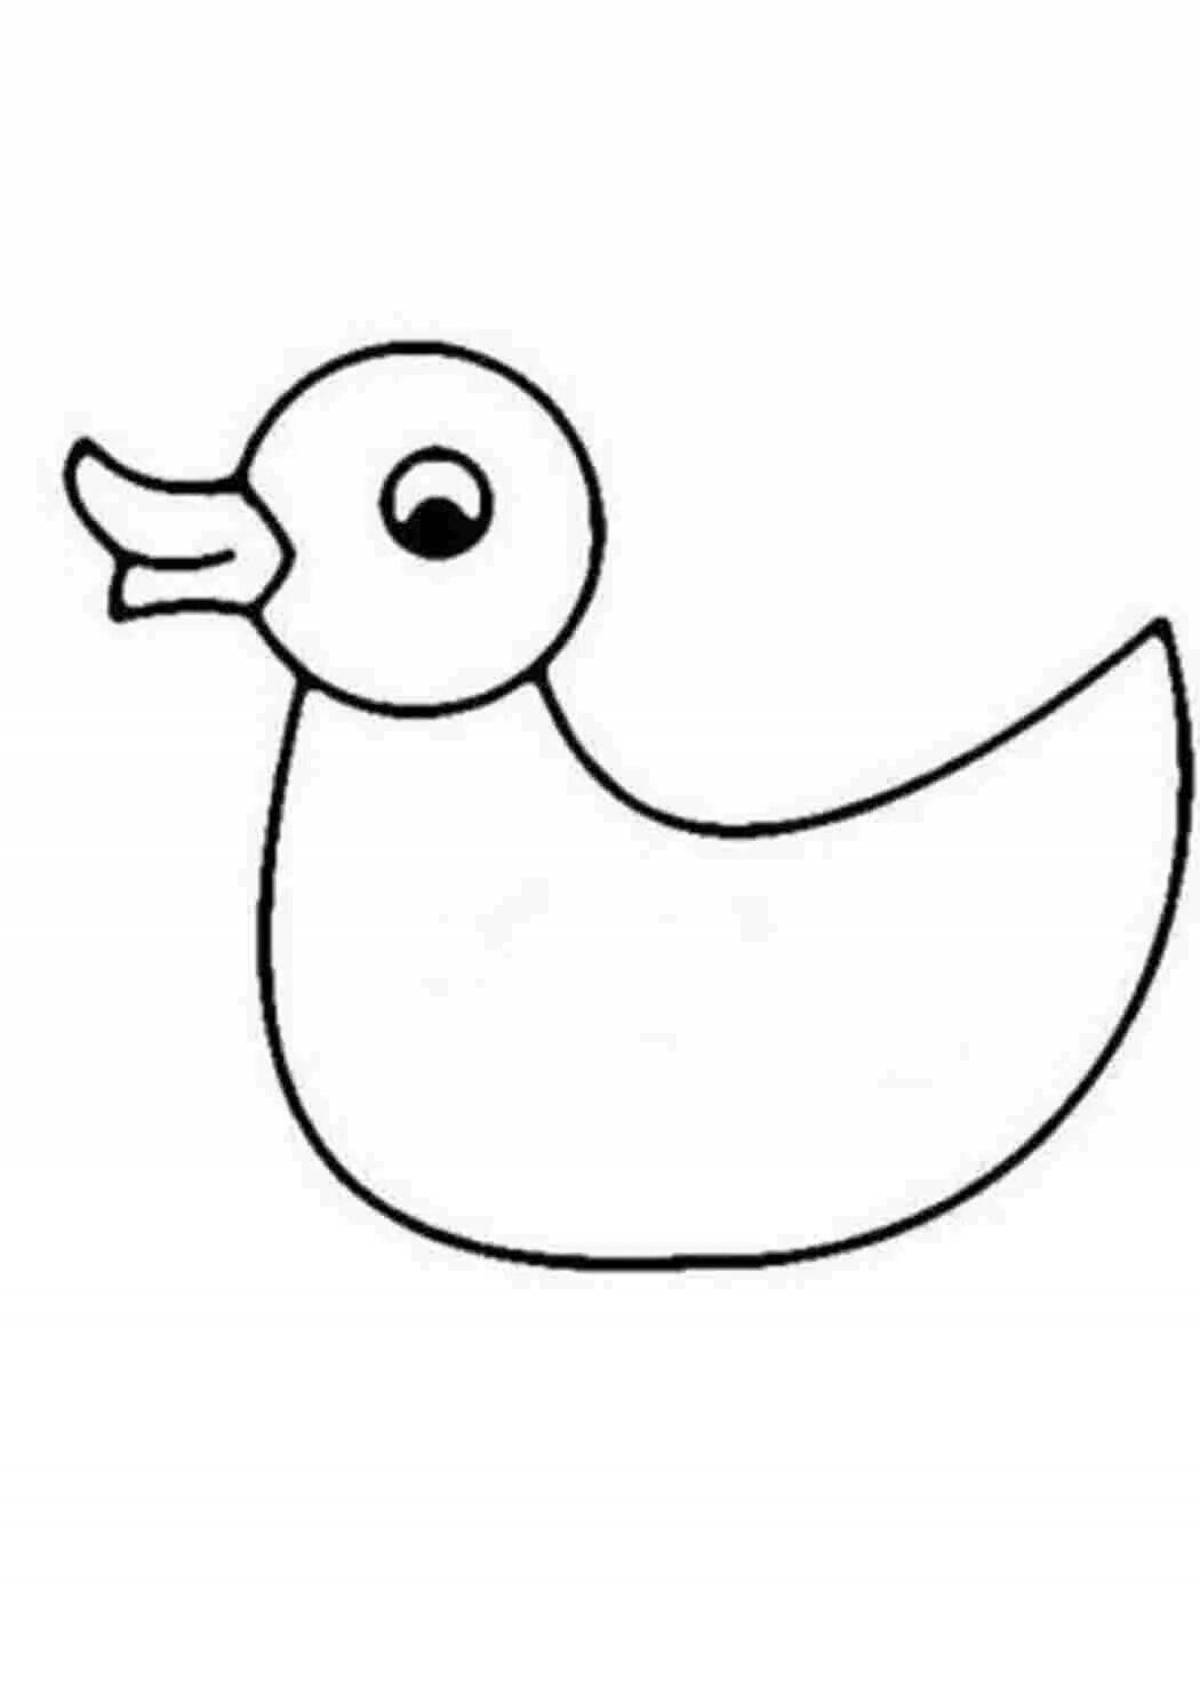 Креативная раскраска дымковская утка для детей 3-4 лет